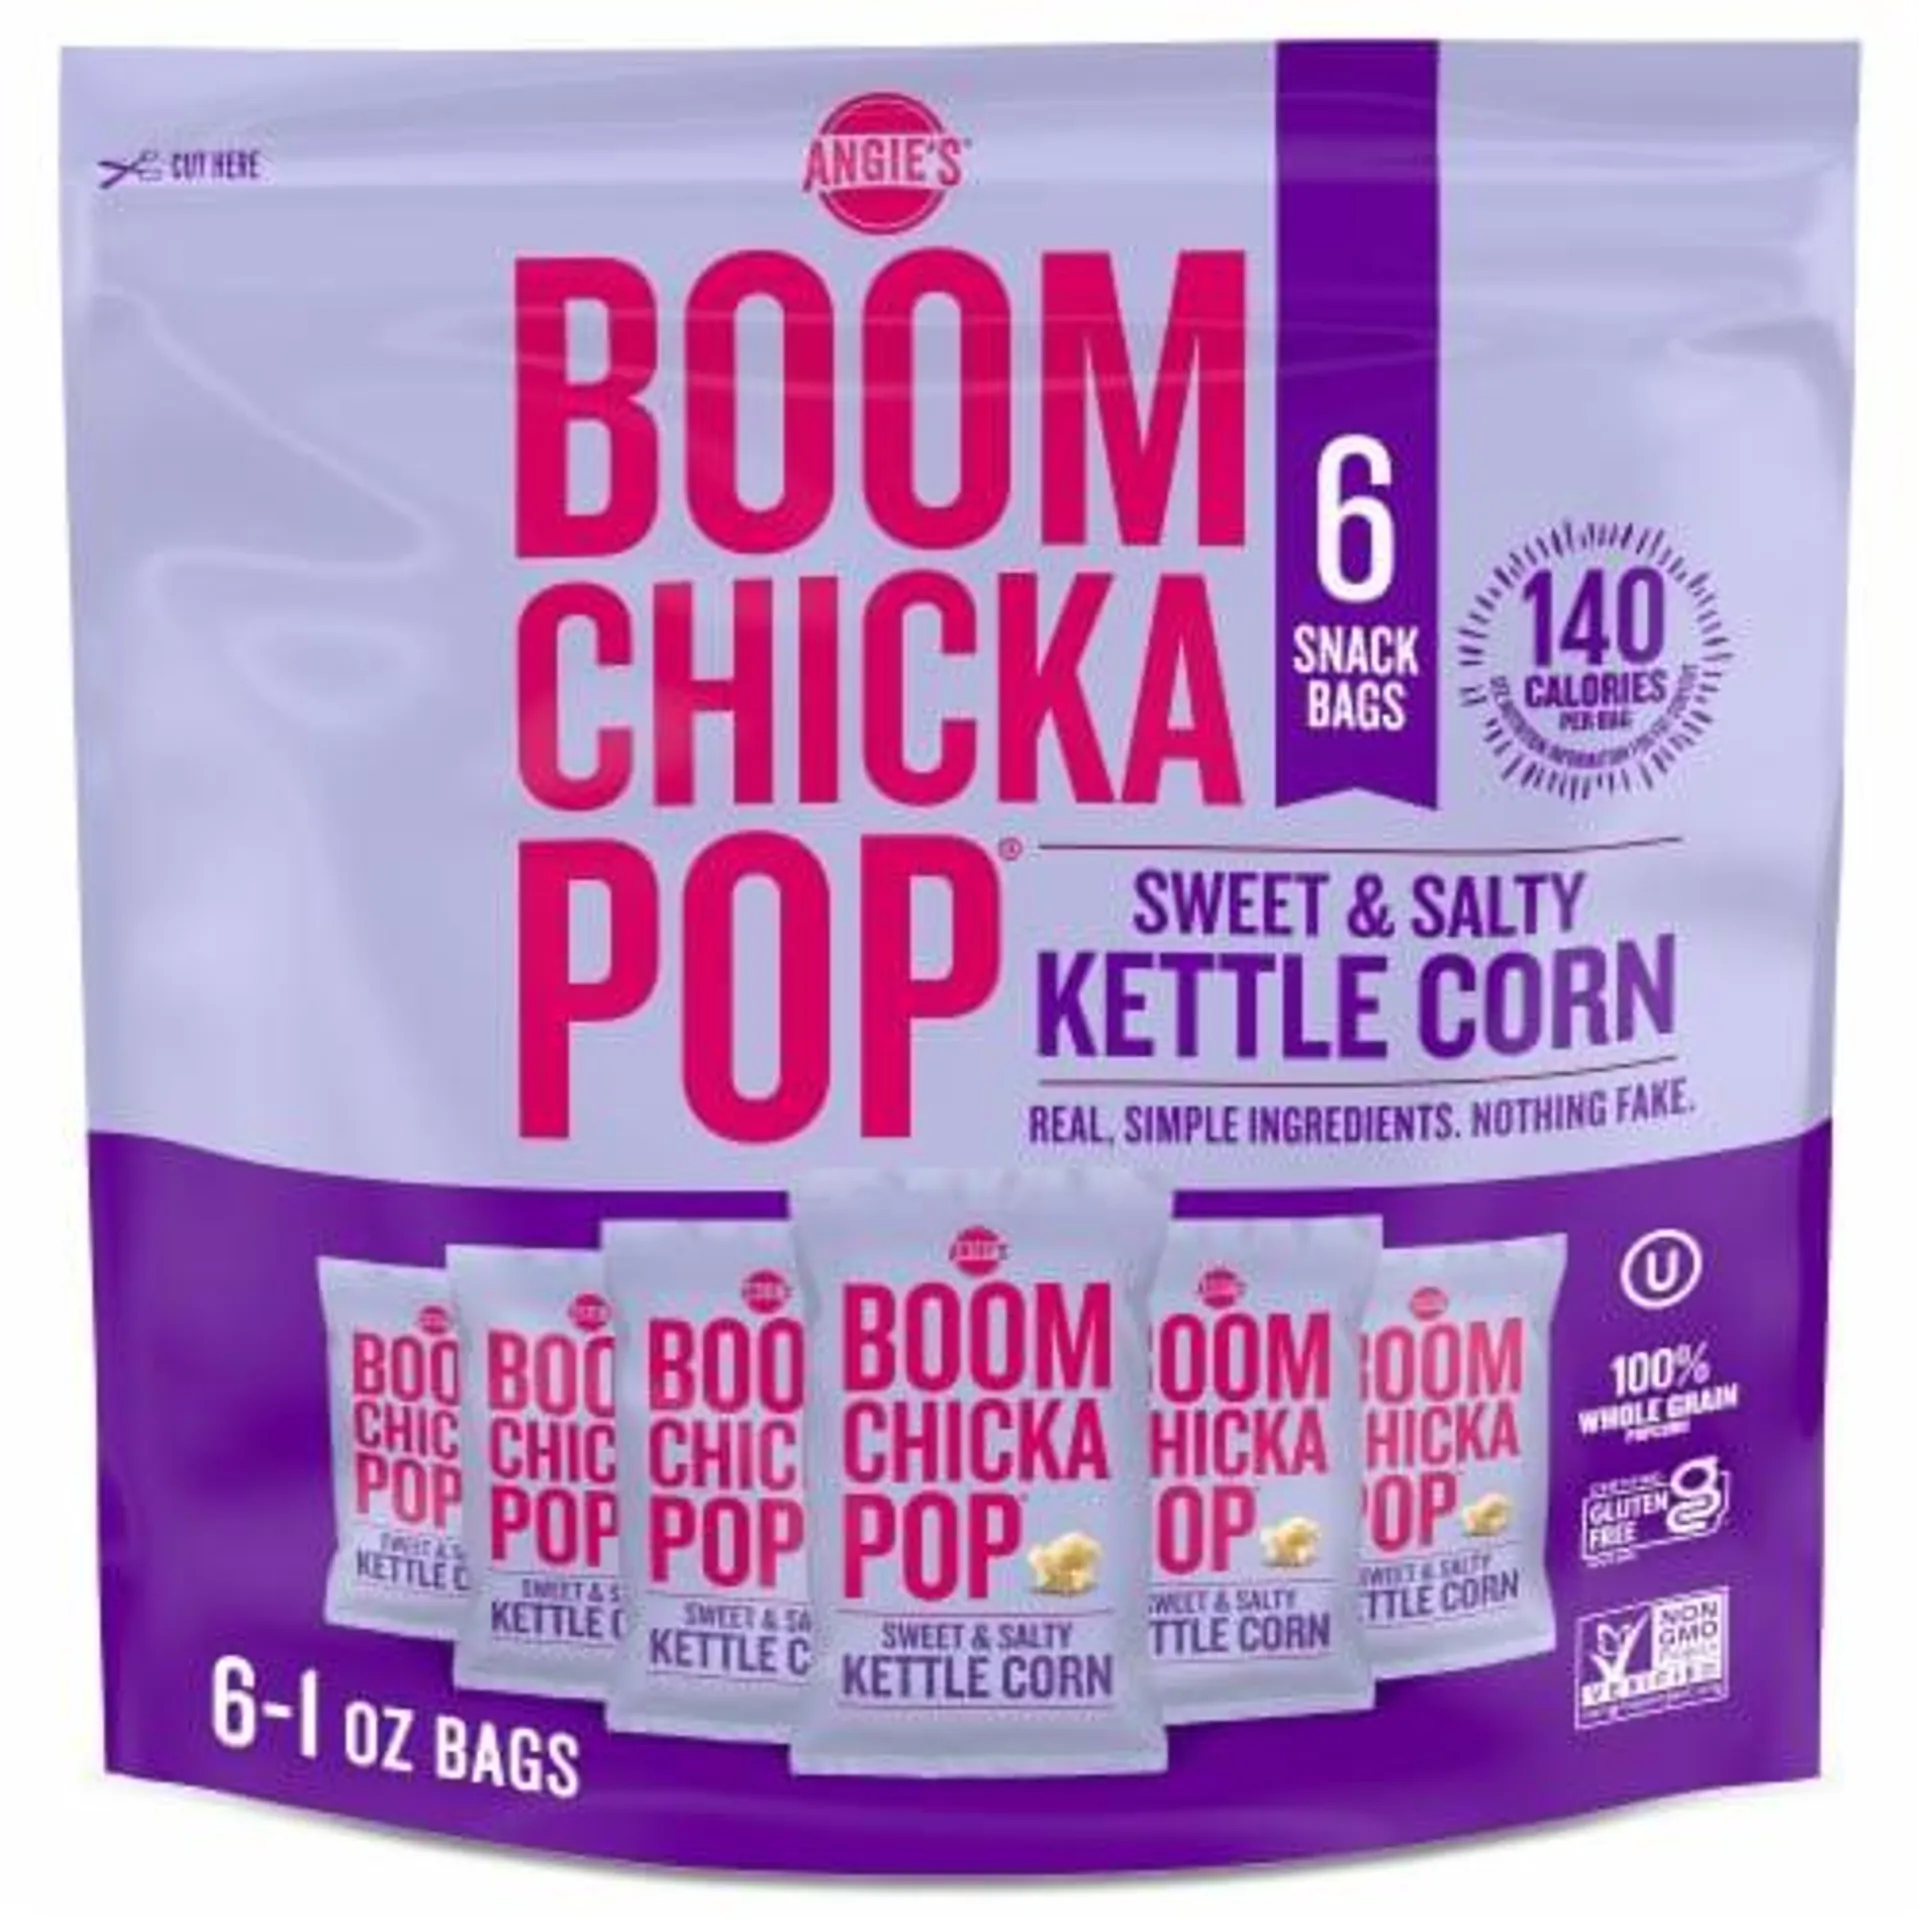 Angie's Boomchickapop Sweet & Salty Kettle Corn Popcorn